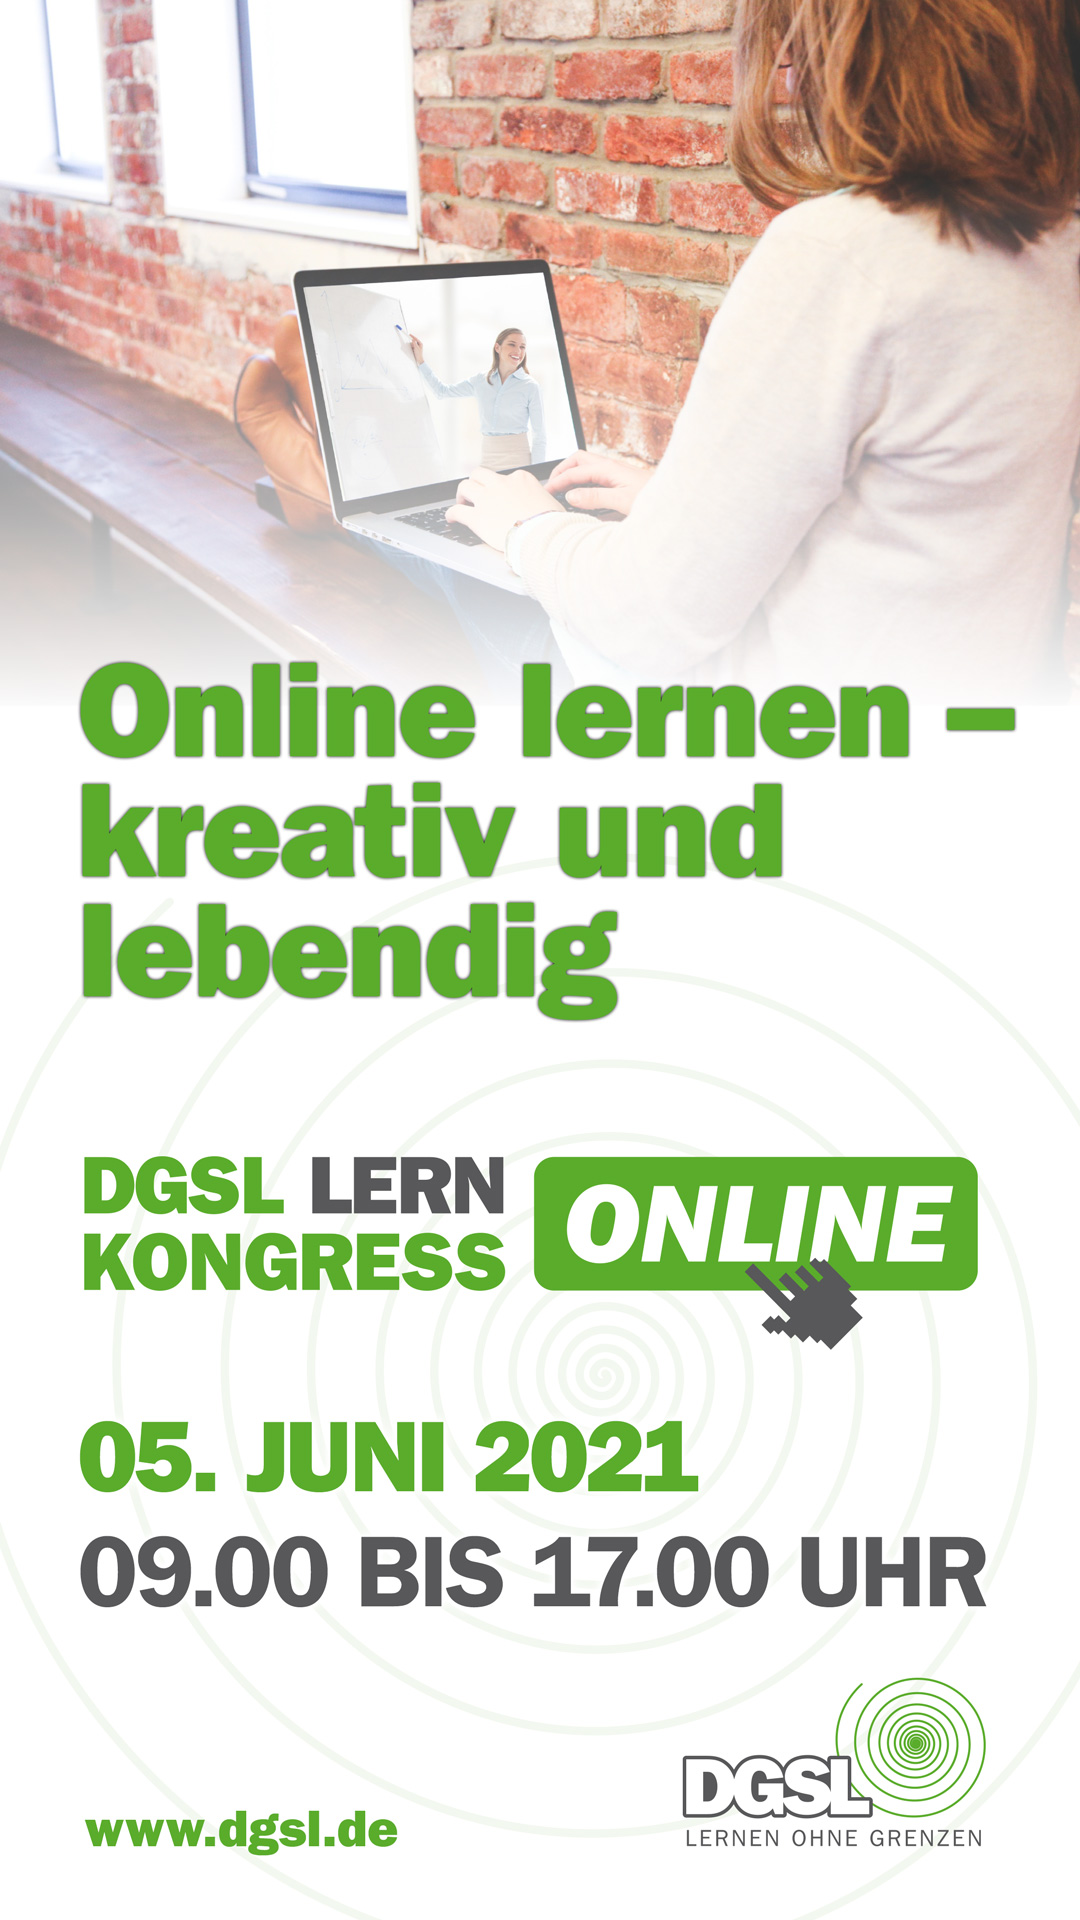 DGSL Lernkongress